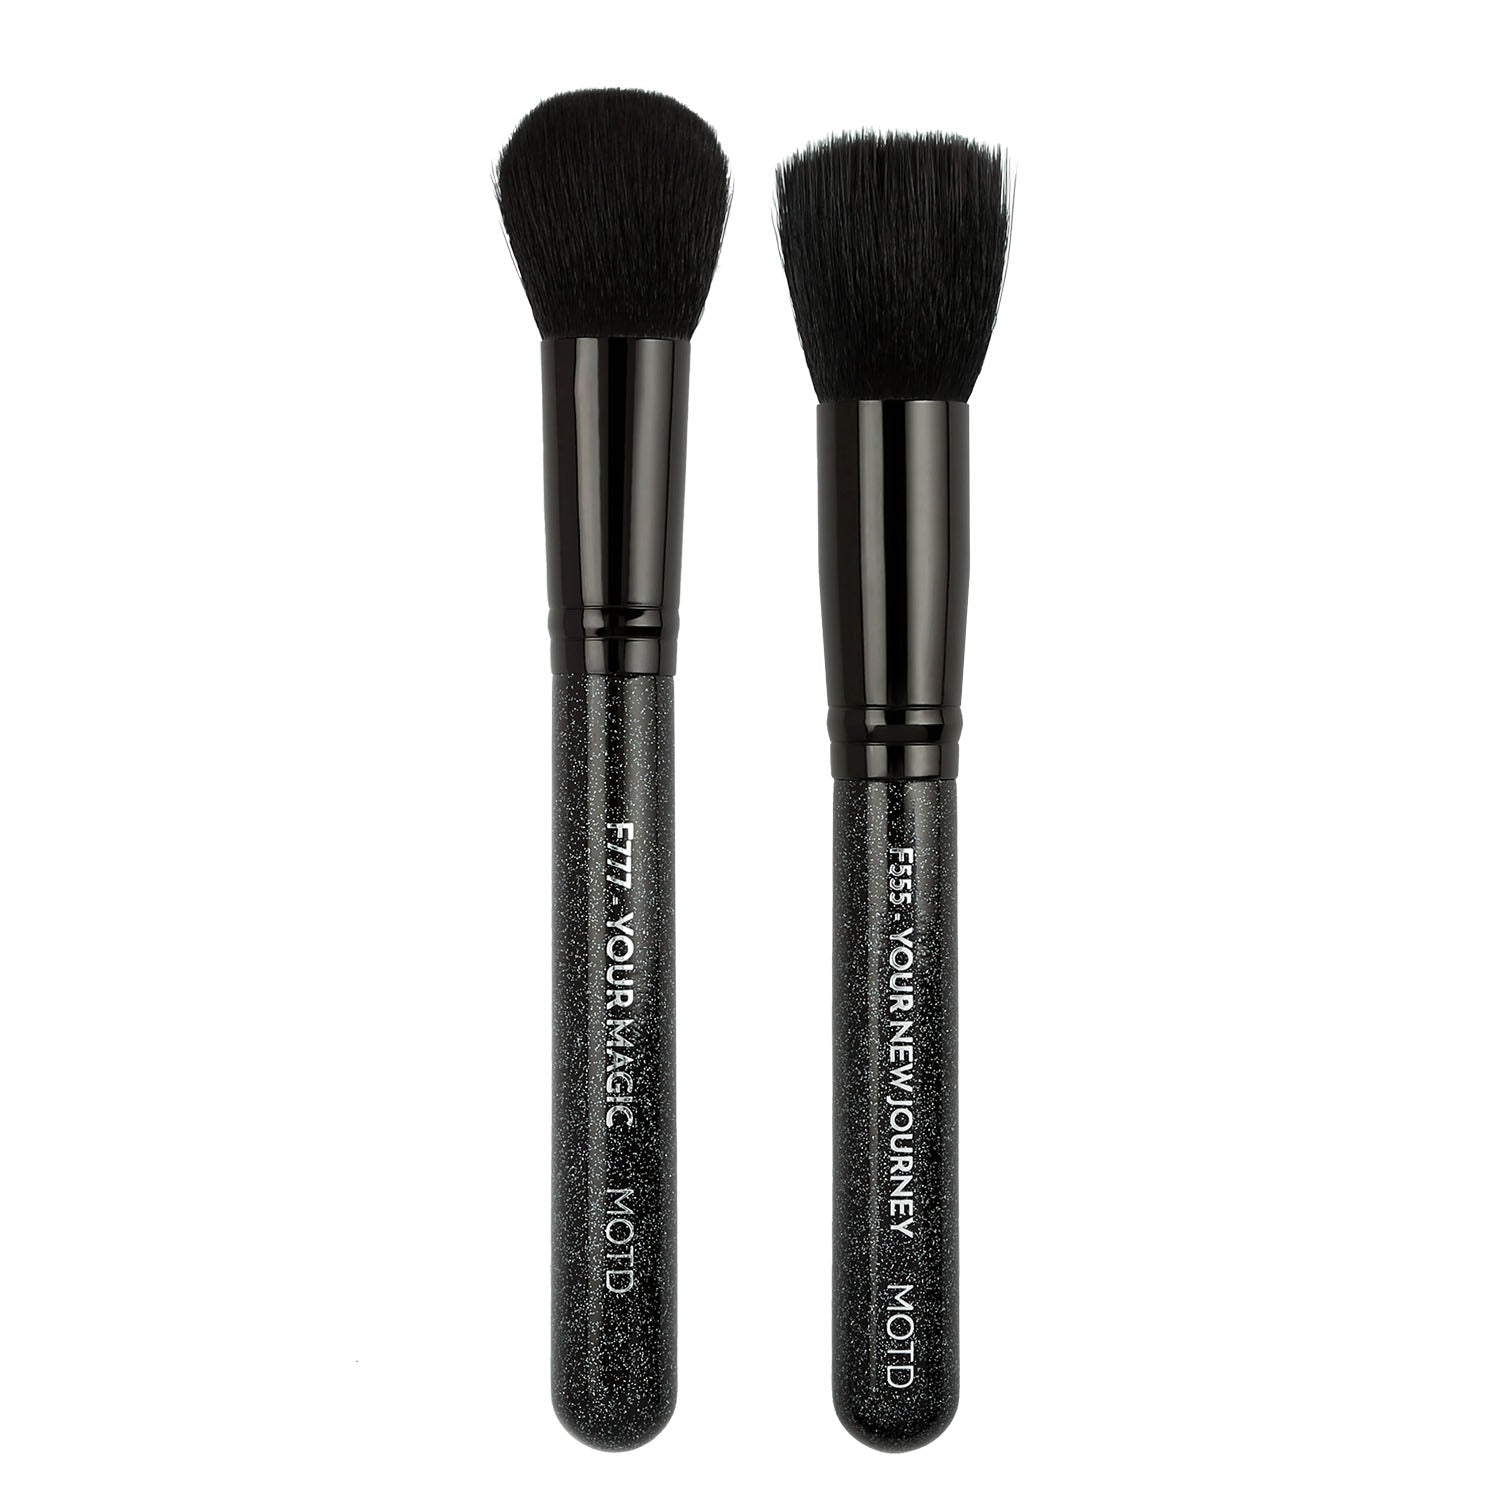 E.l.f. Cosmetics Domed Stipple Brush - Black - 836 requests